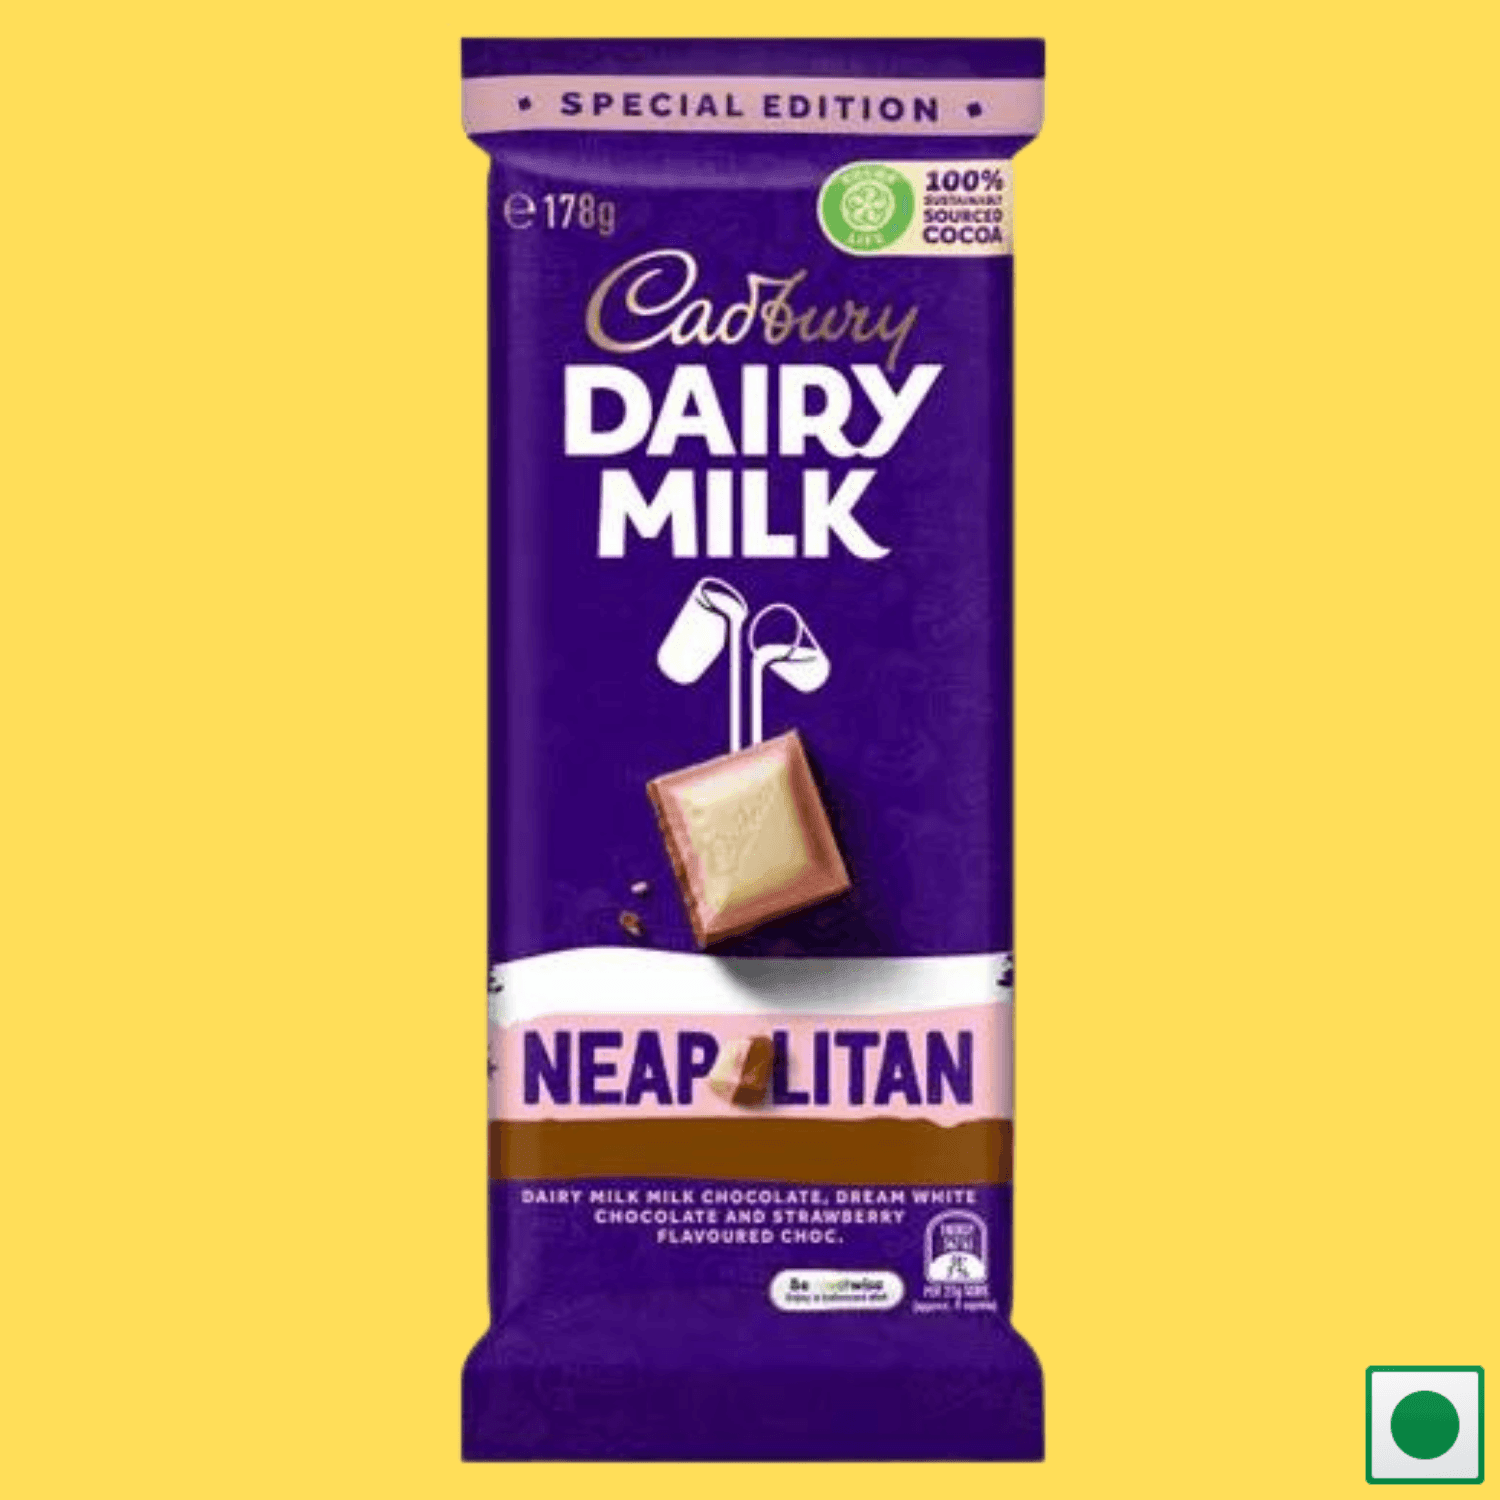 Cadbury Dairy Milk Neapolitan Special Edition, 178g (Australian Imported) - Super 7 Mart